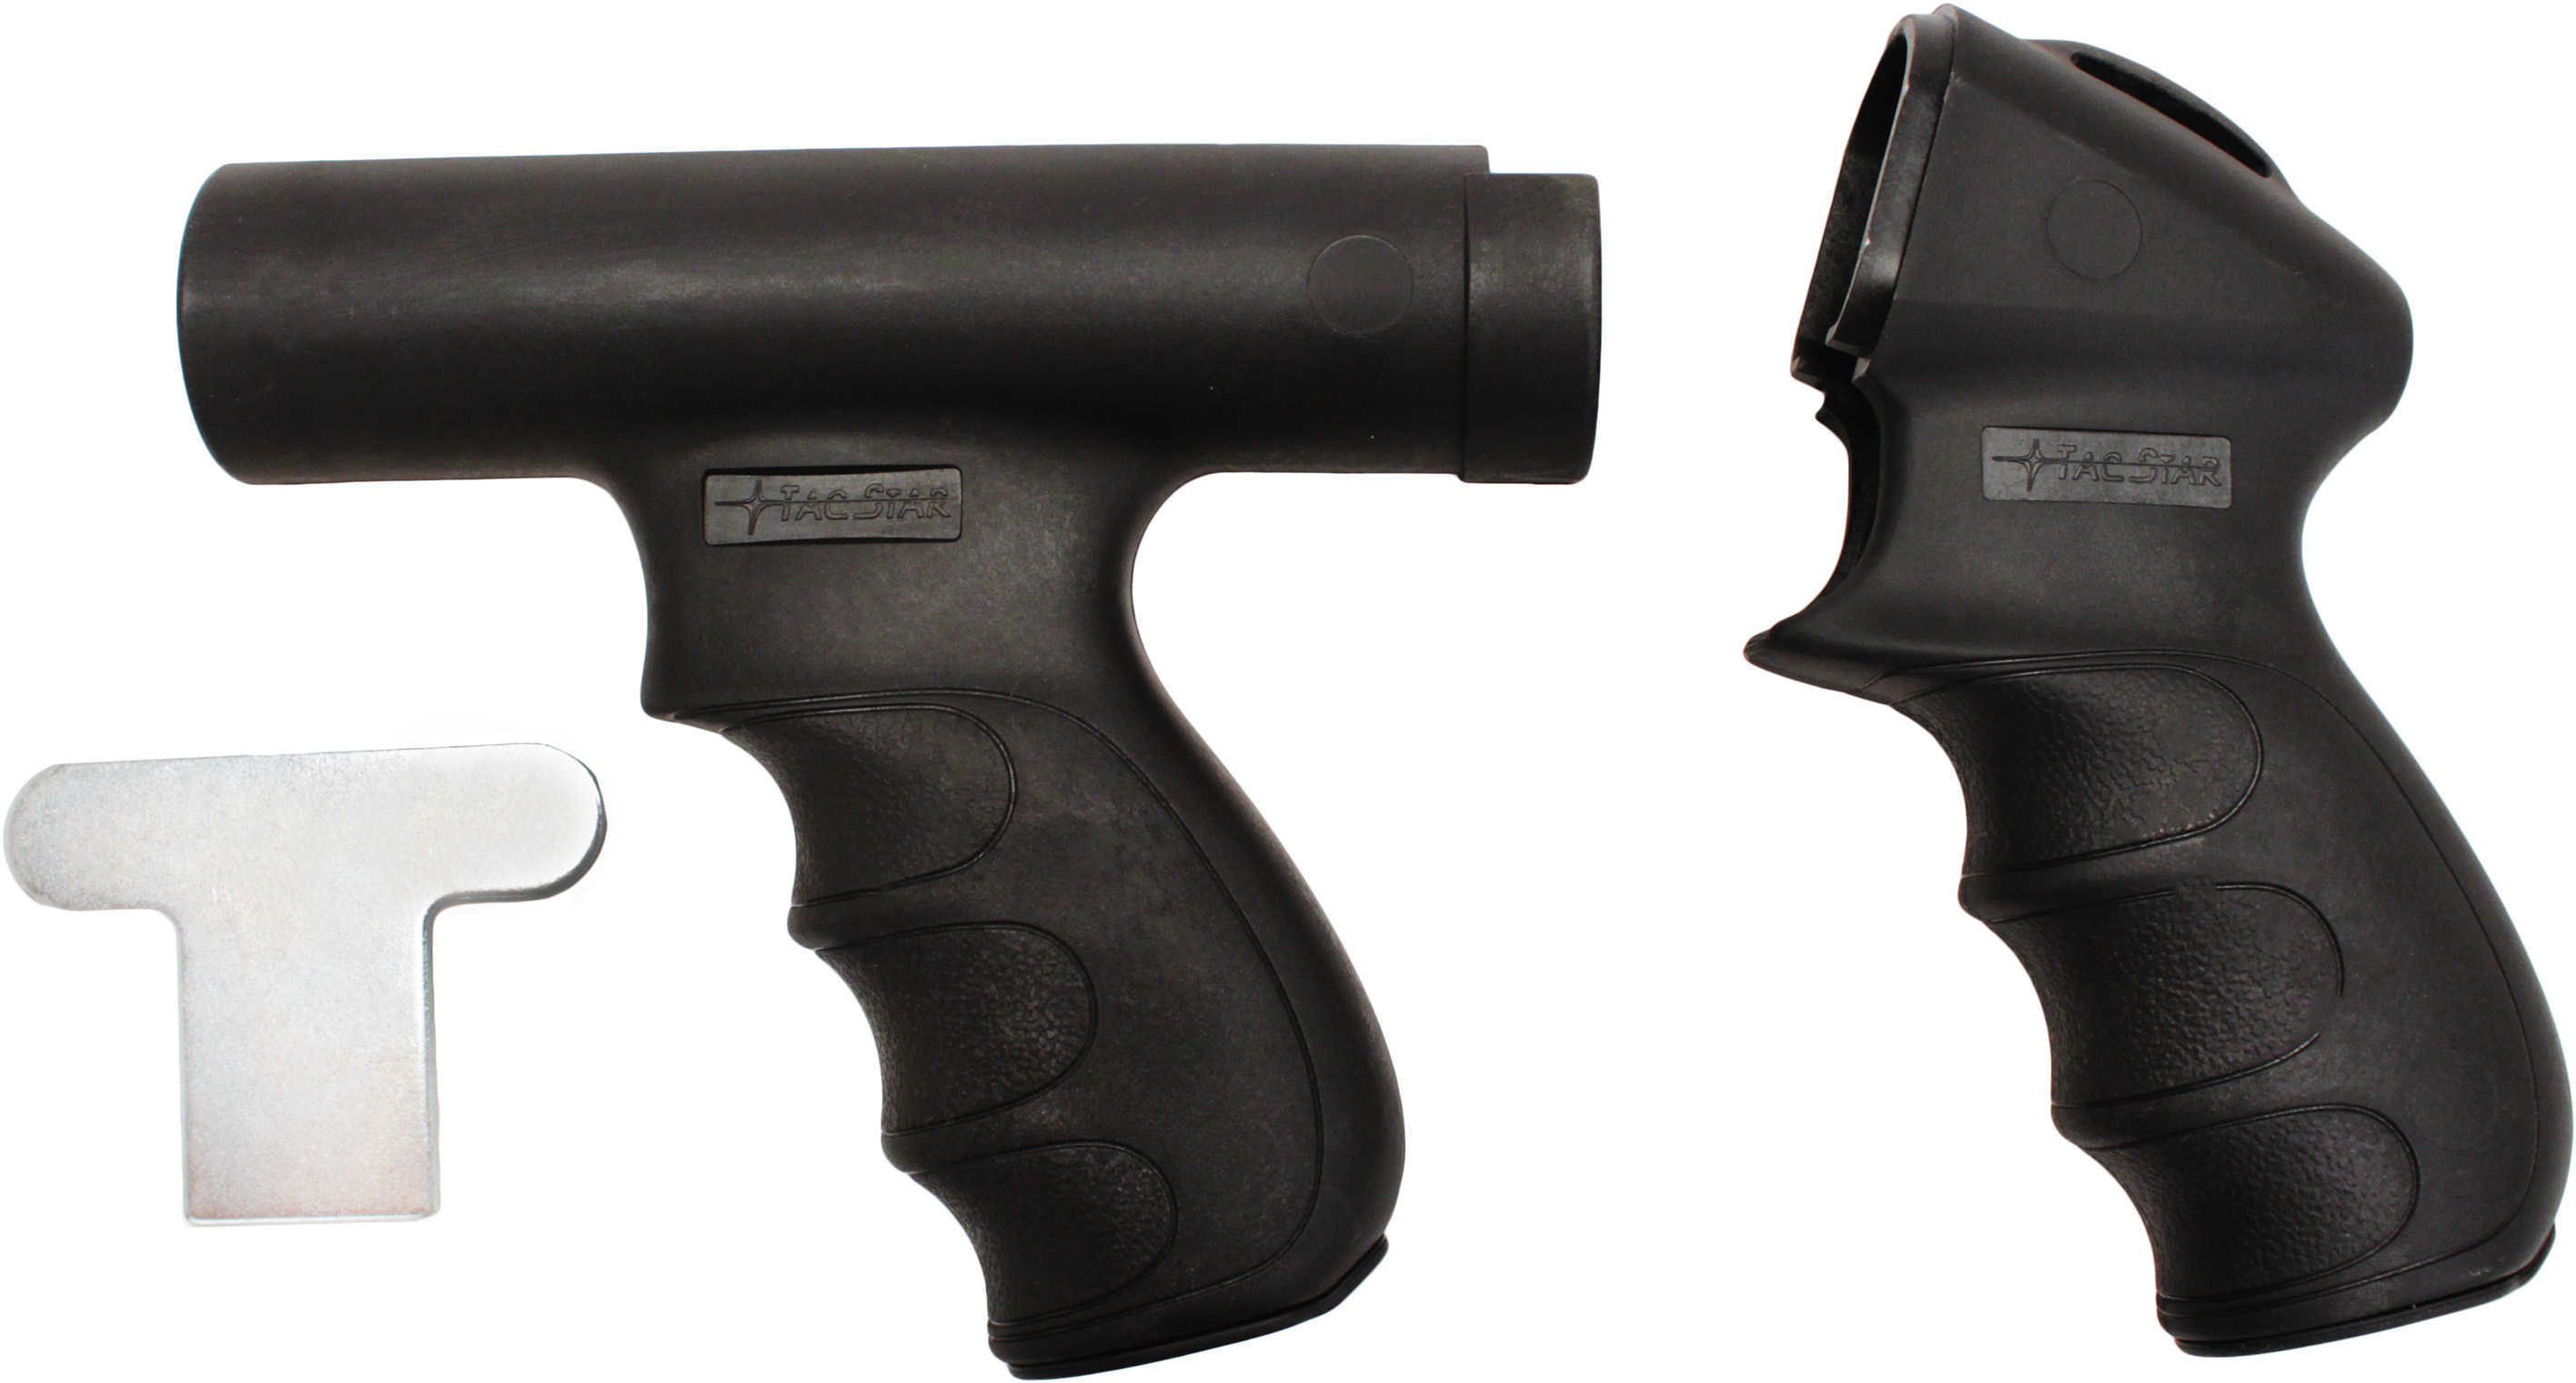 TacStar Industries Front Rear Set Pistol Grip Rem 870 1081149